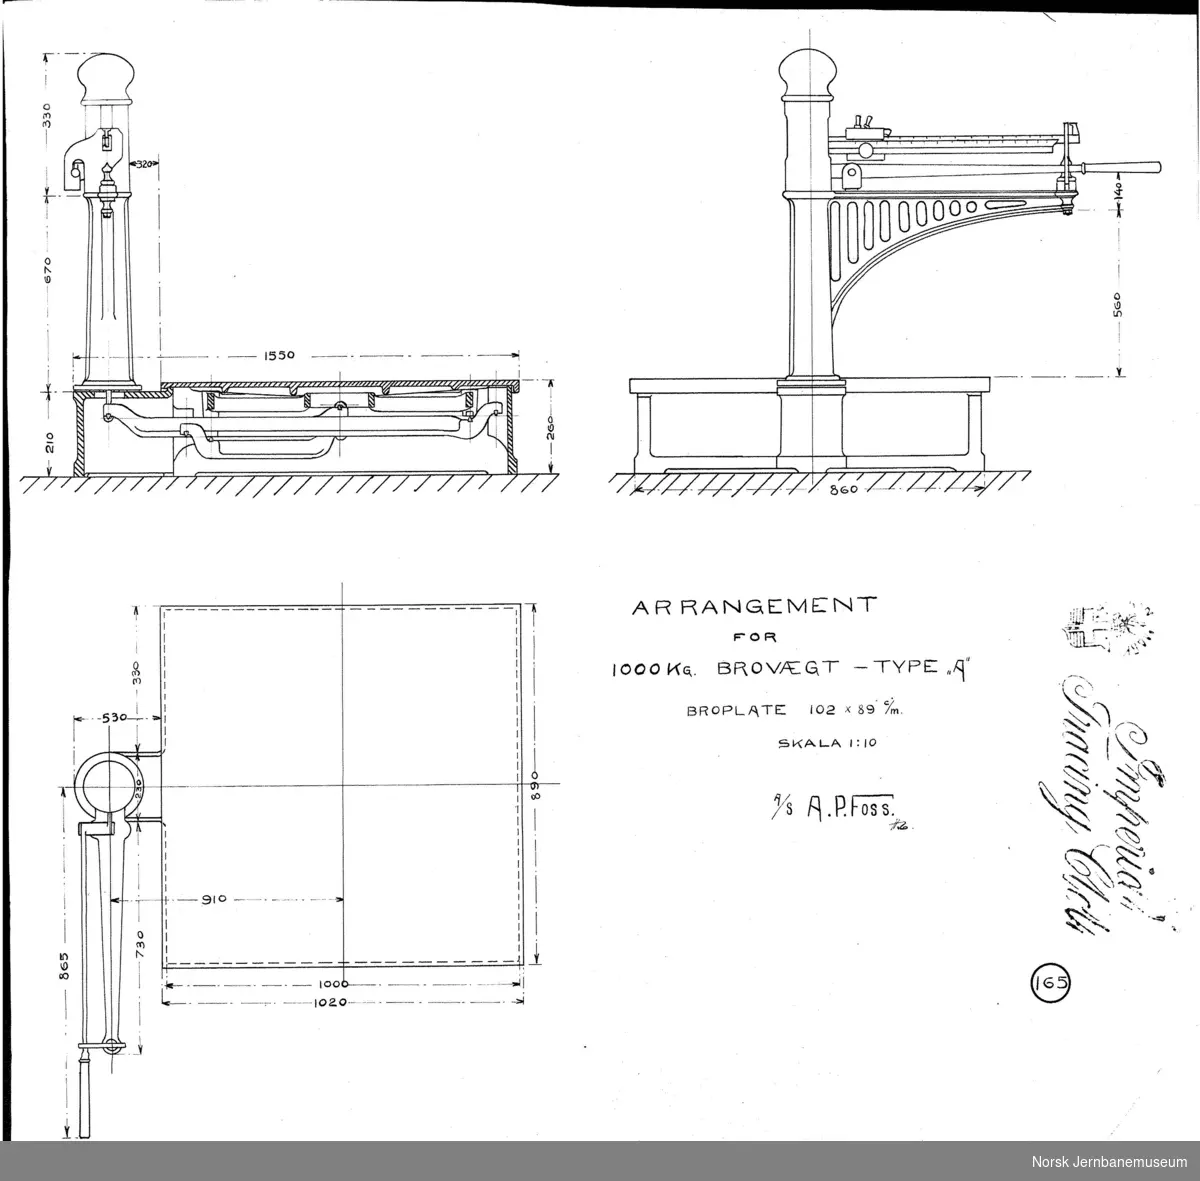 Arrangement for 1000 kg brovægt - type "A"
A. P. Foss tegning no. 165